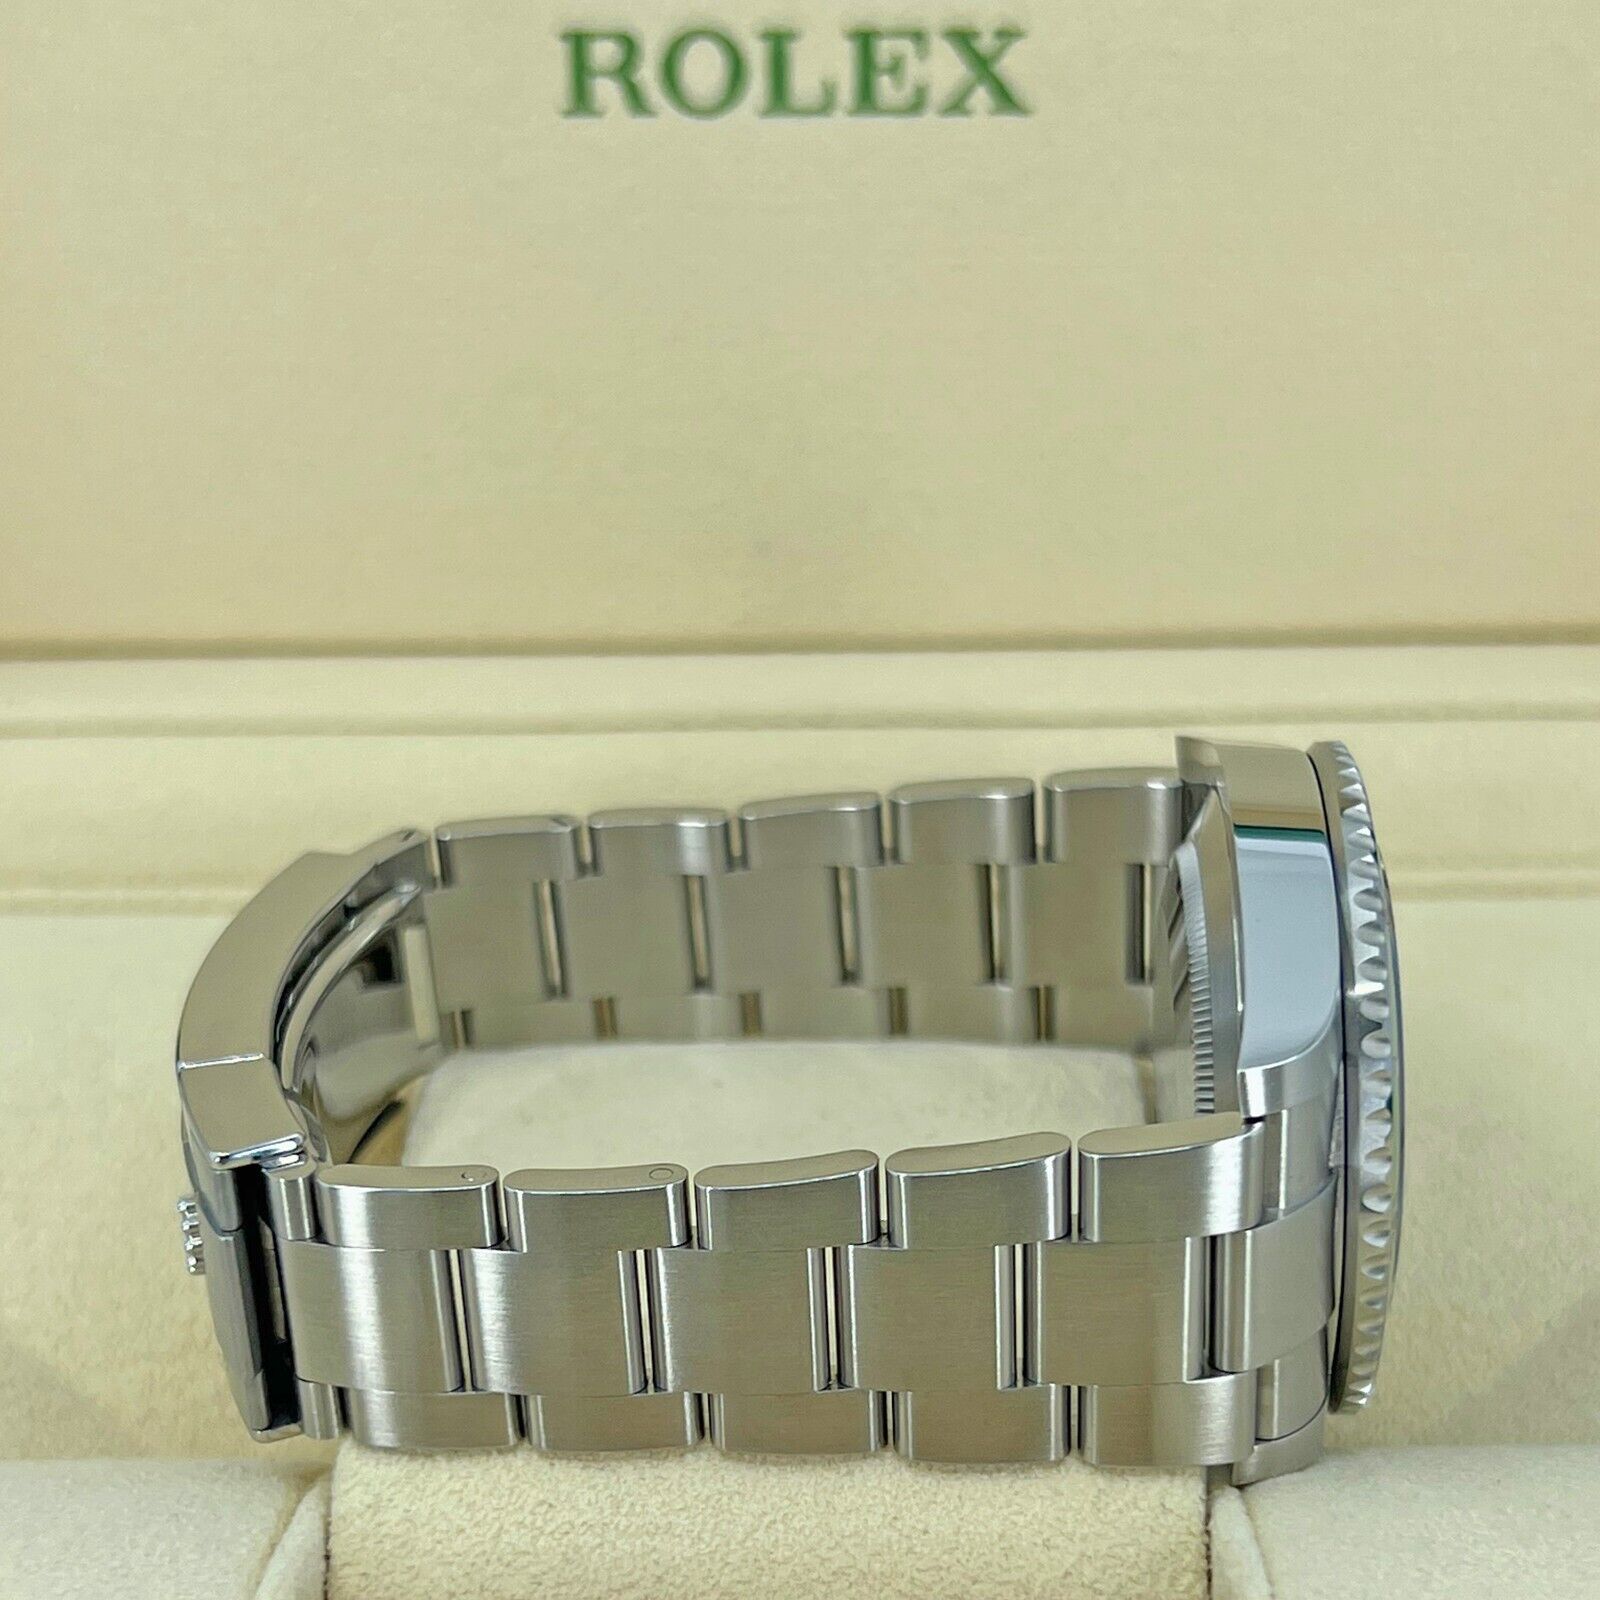 Rolex Submariner Kermit Date 41mm – Impossible Watches